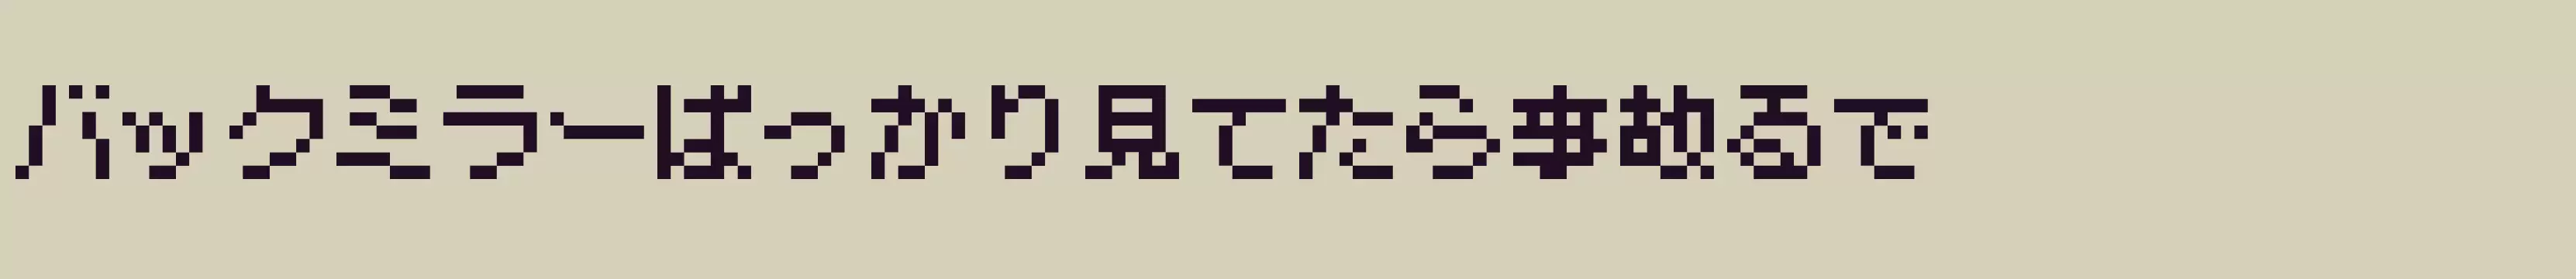 「misaki_gothic_2nd」字体效果图